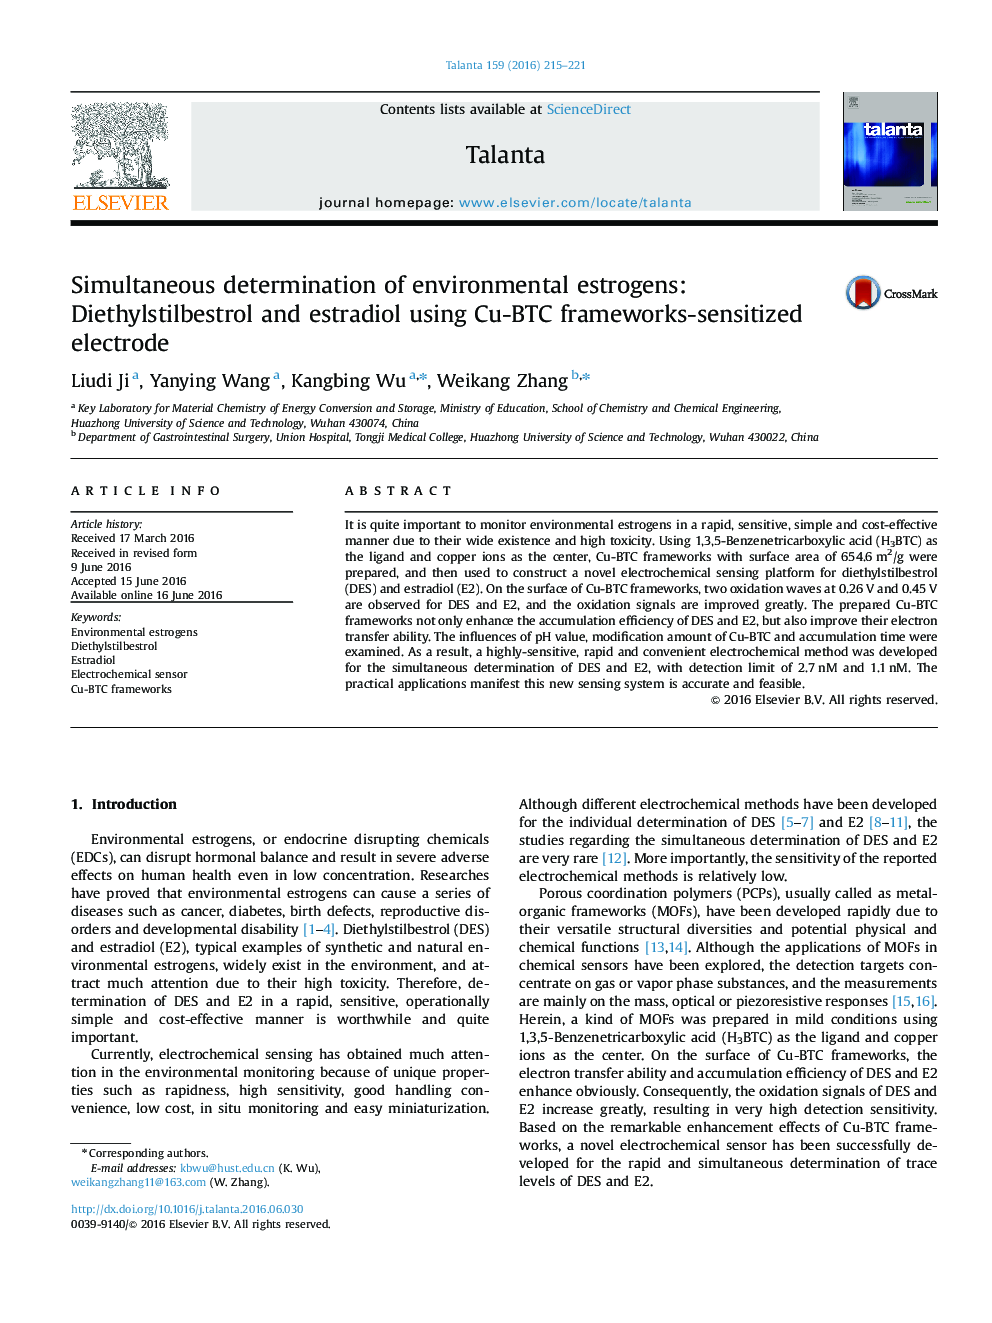 Simultaneous determination of environmental estrogens: Diethylstilbestrol and estradiol using Cu-BTC frameworks-sensitized electrode